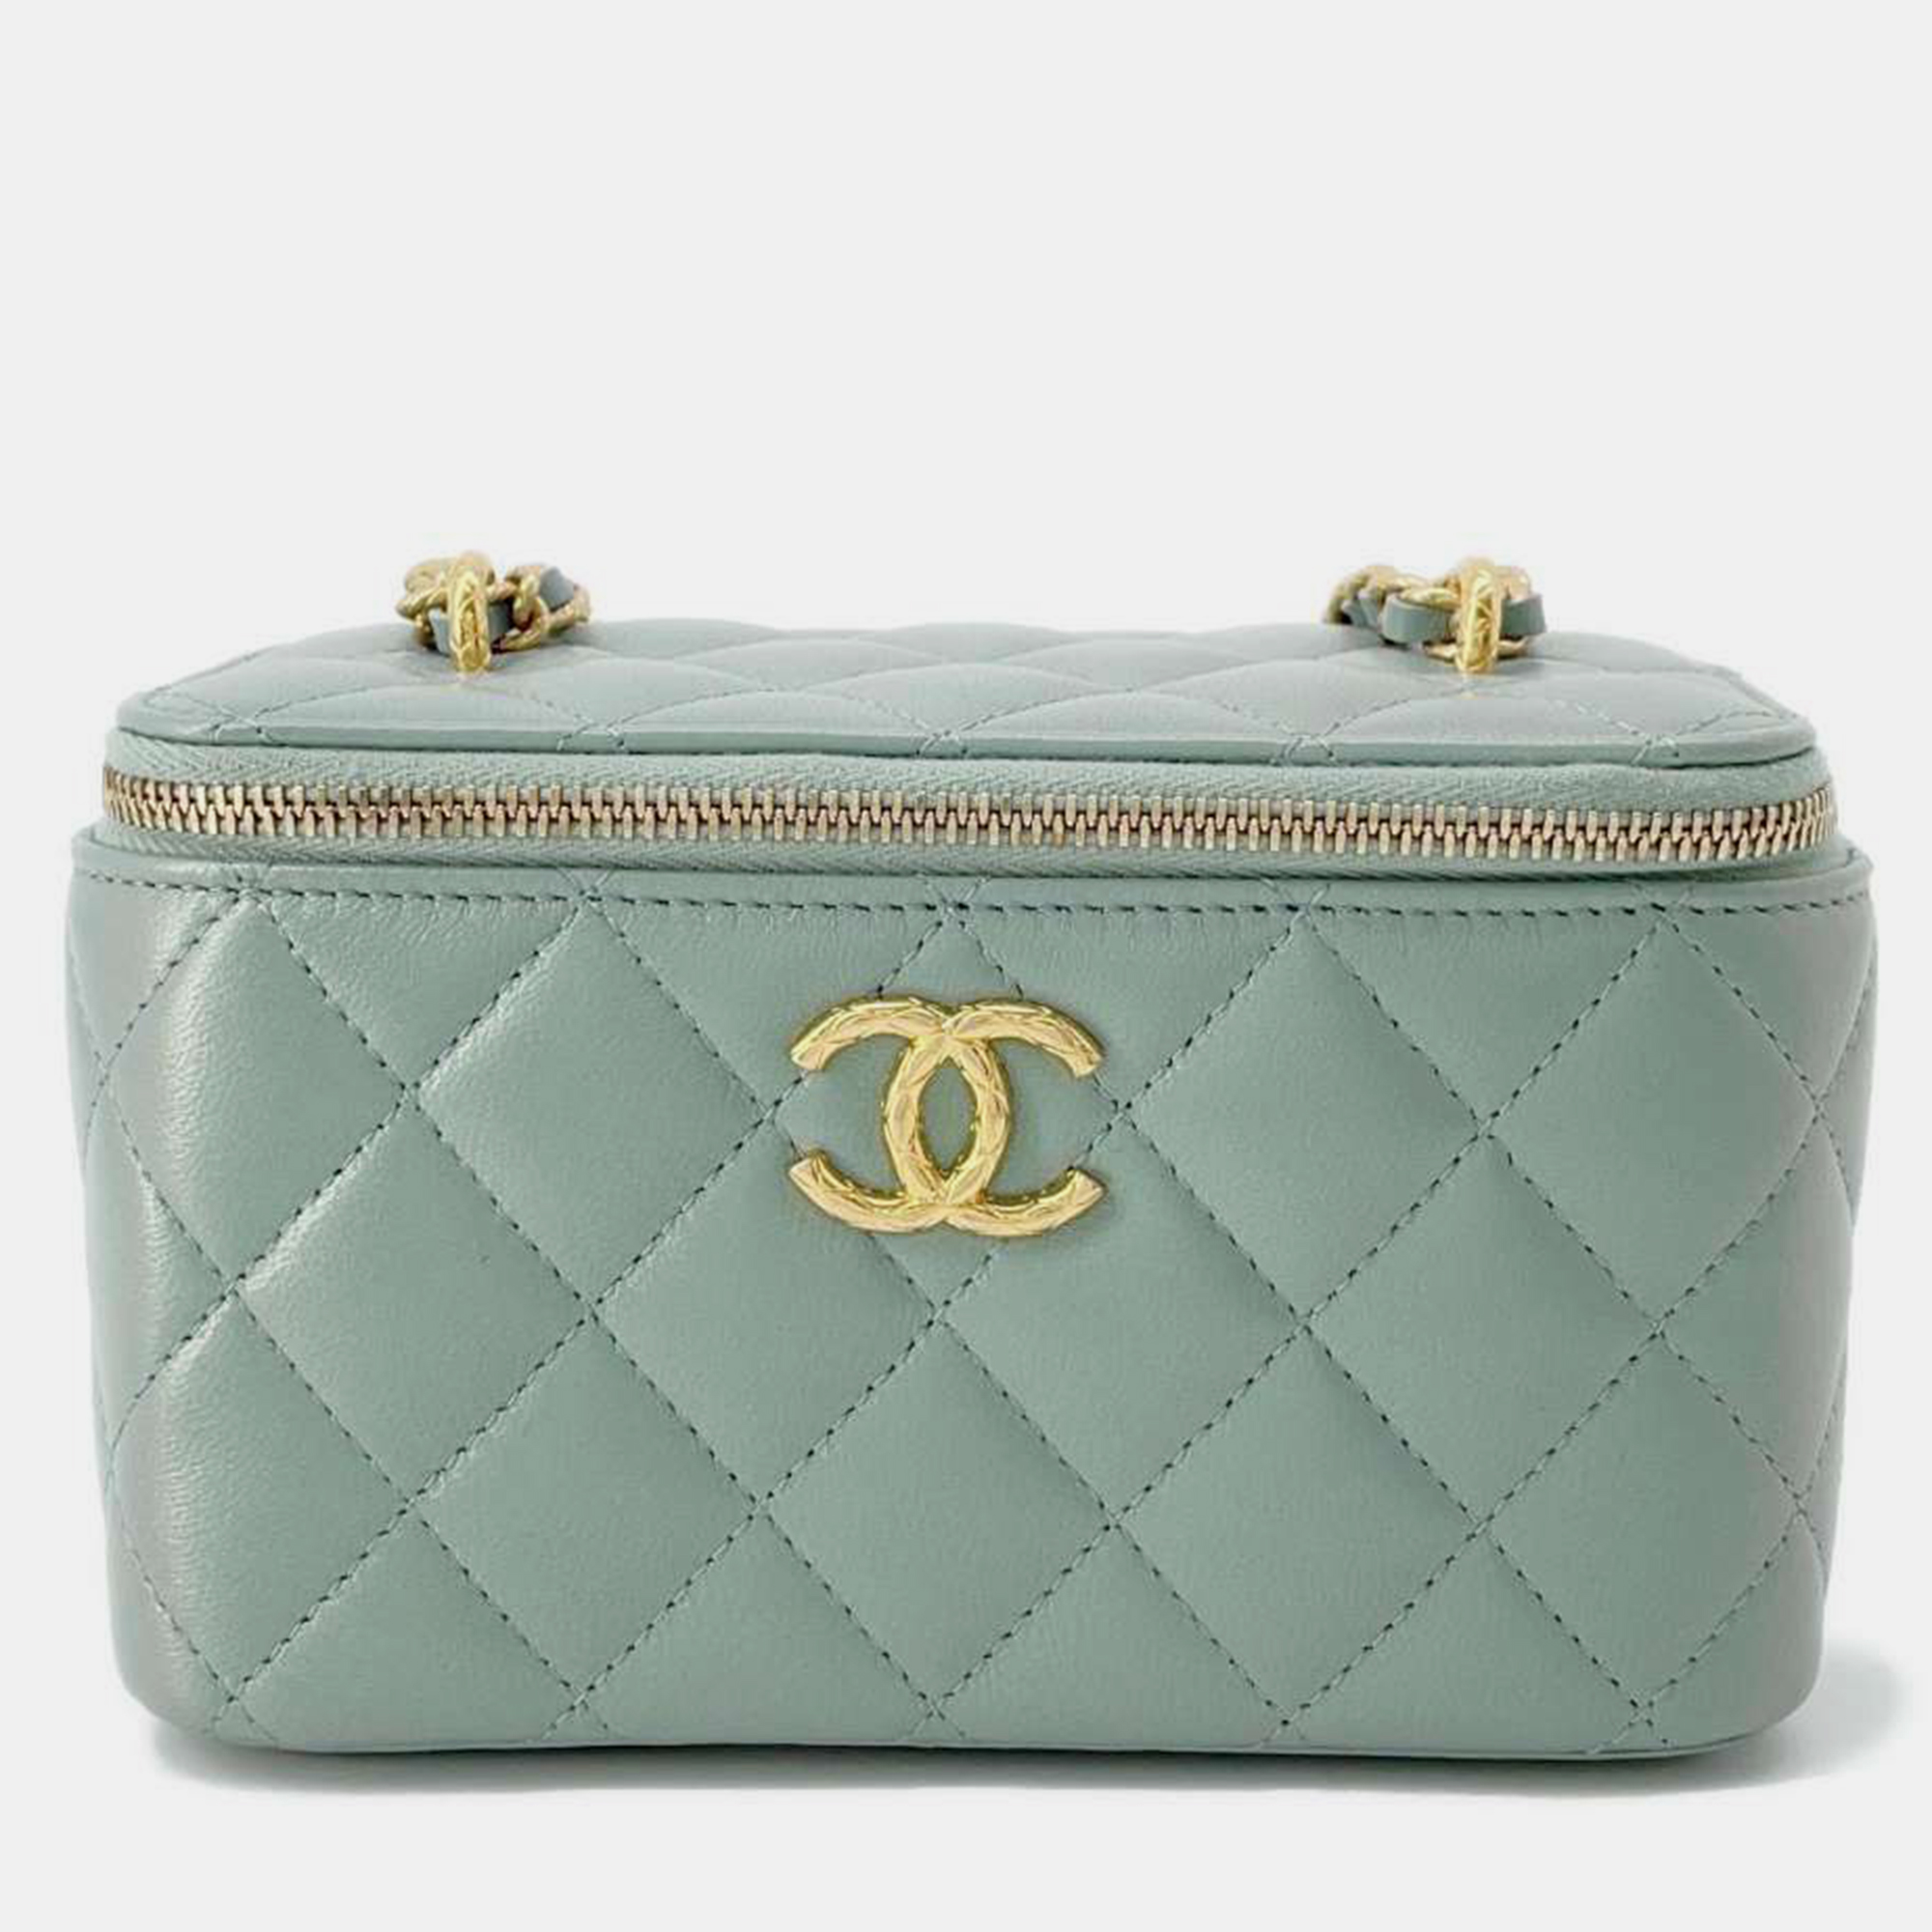 Chanel metallic green leather small vanity case handbag